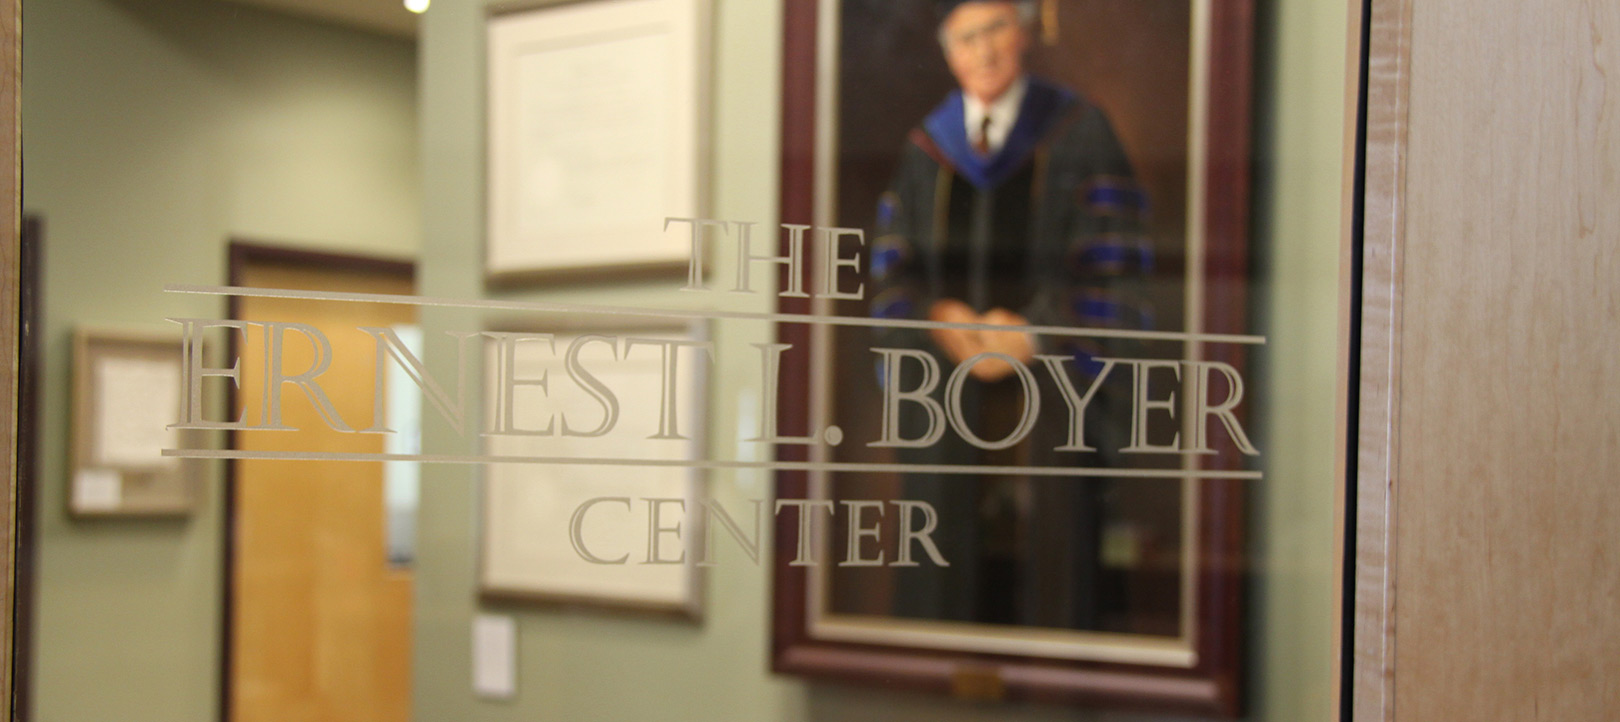 The Ernest L. Boyer Center Boyer Center etching.jpeg